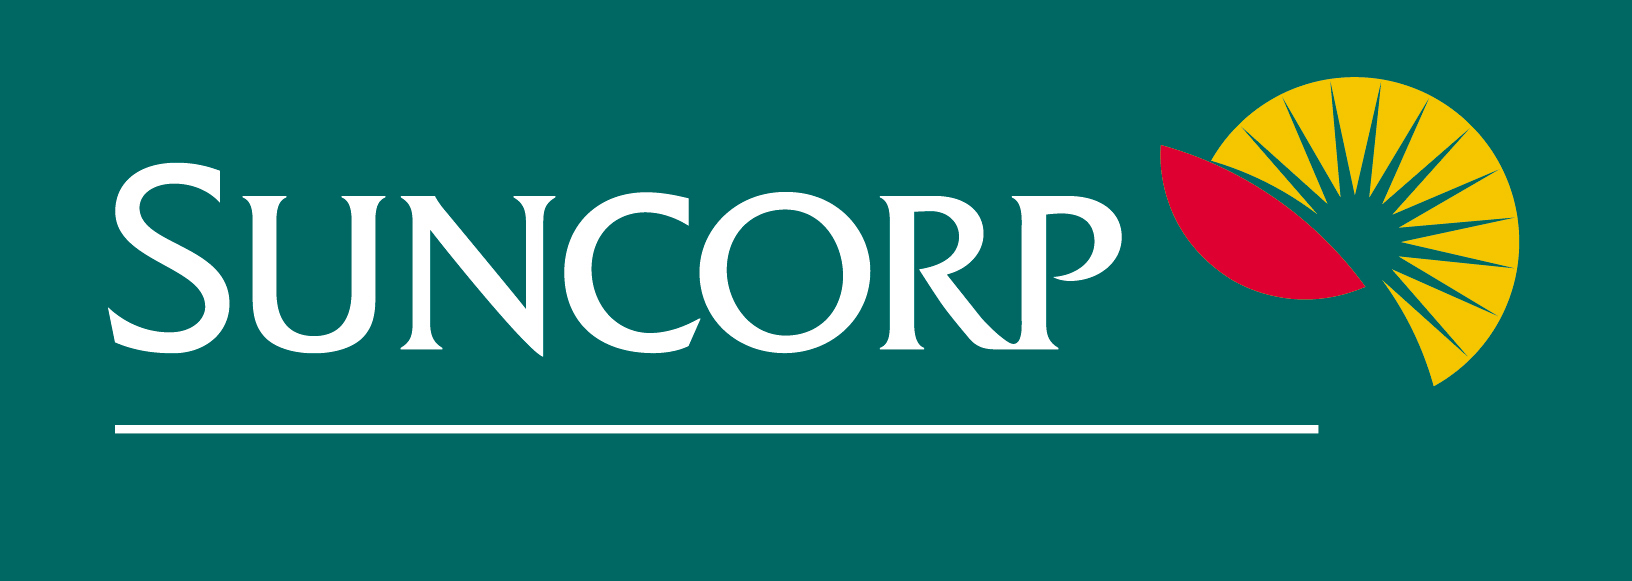 suncorp-logo-140.jpg